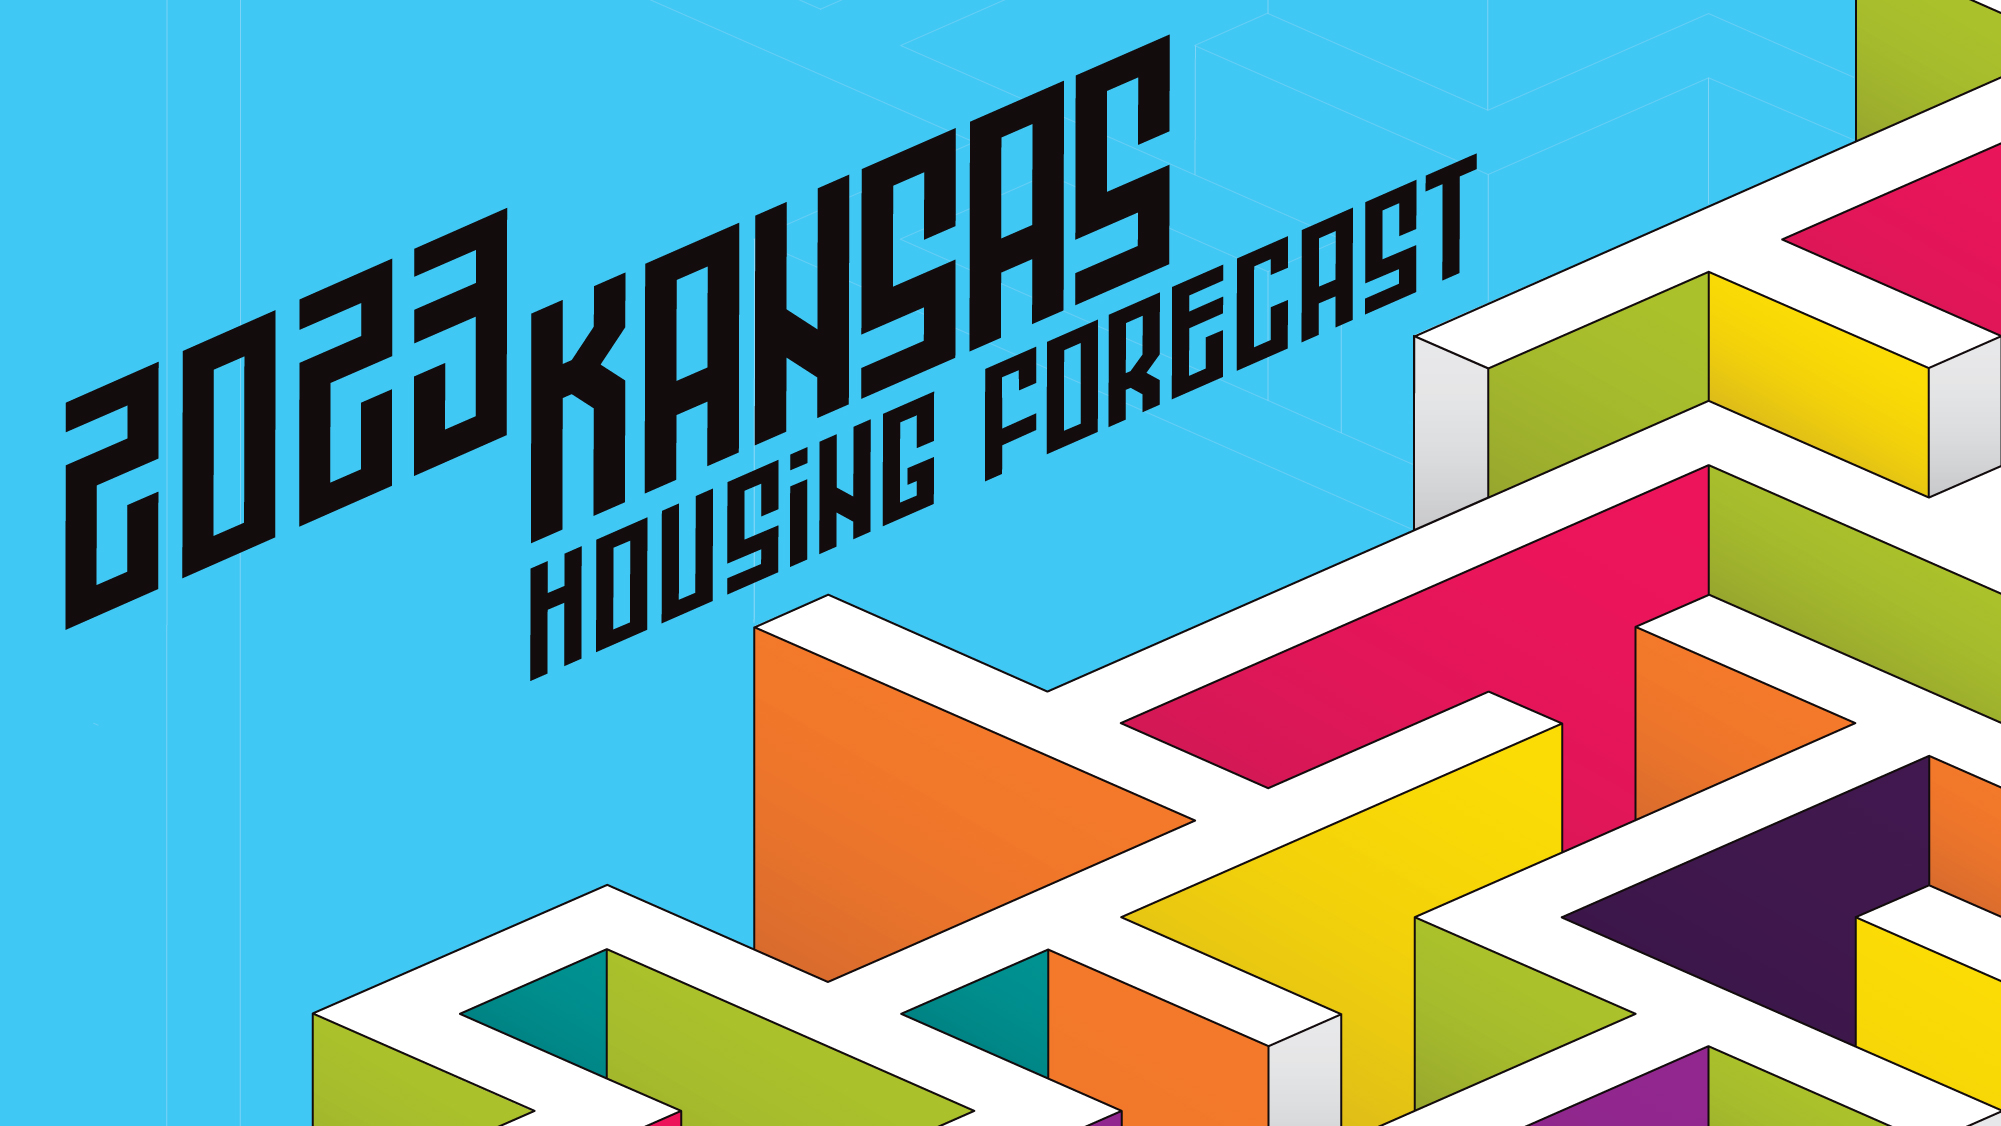 Kansas Housing Markets Forecast Series